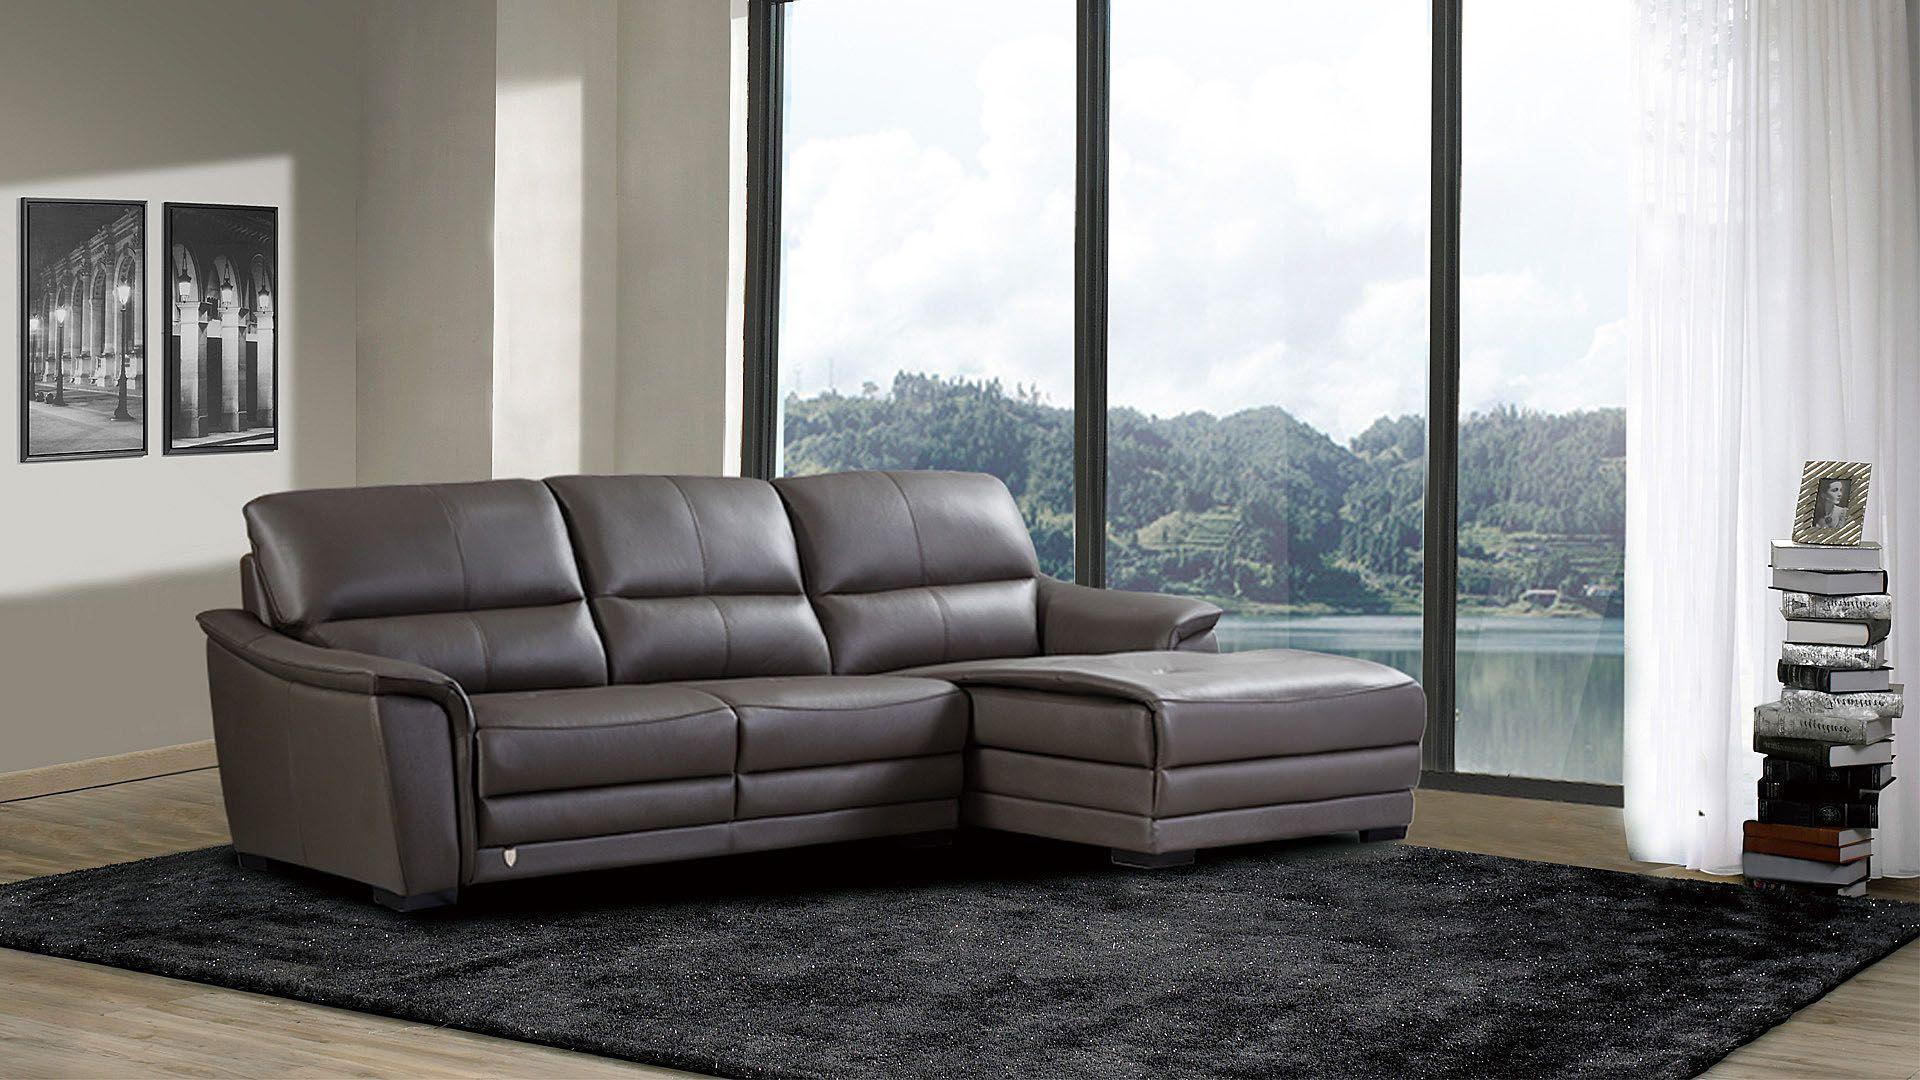 Contemporary, Modern Sectional Sofa EK-L046L-TPE EK-L046L-TPE in Taupe Italian Leather